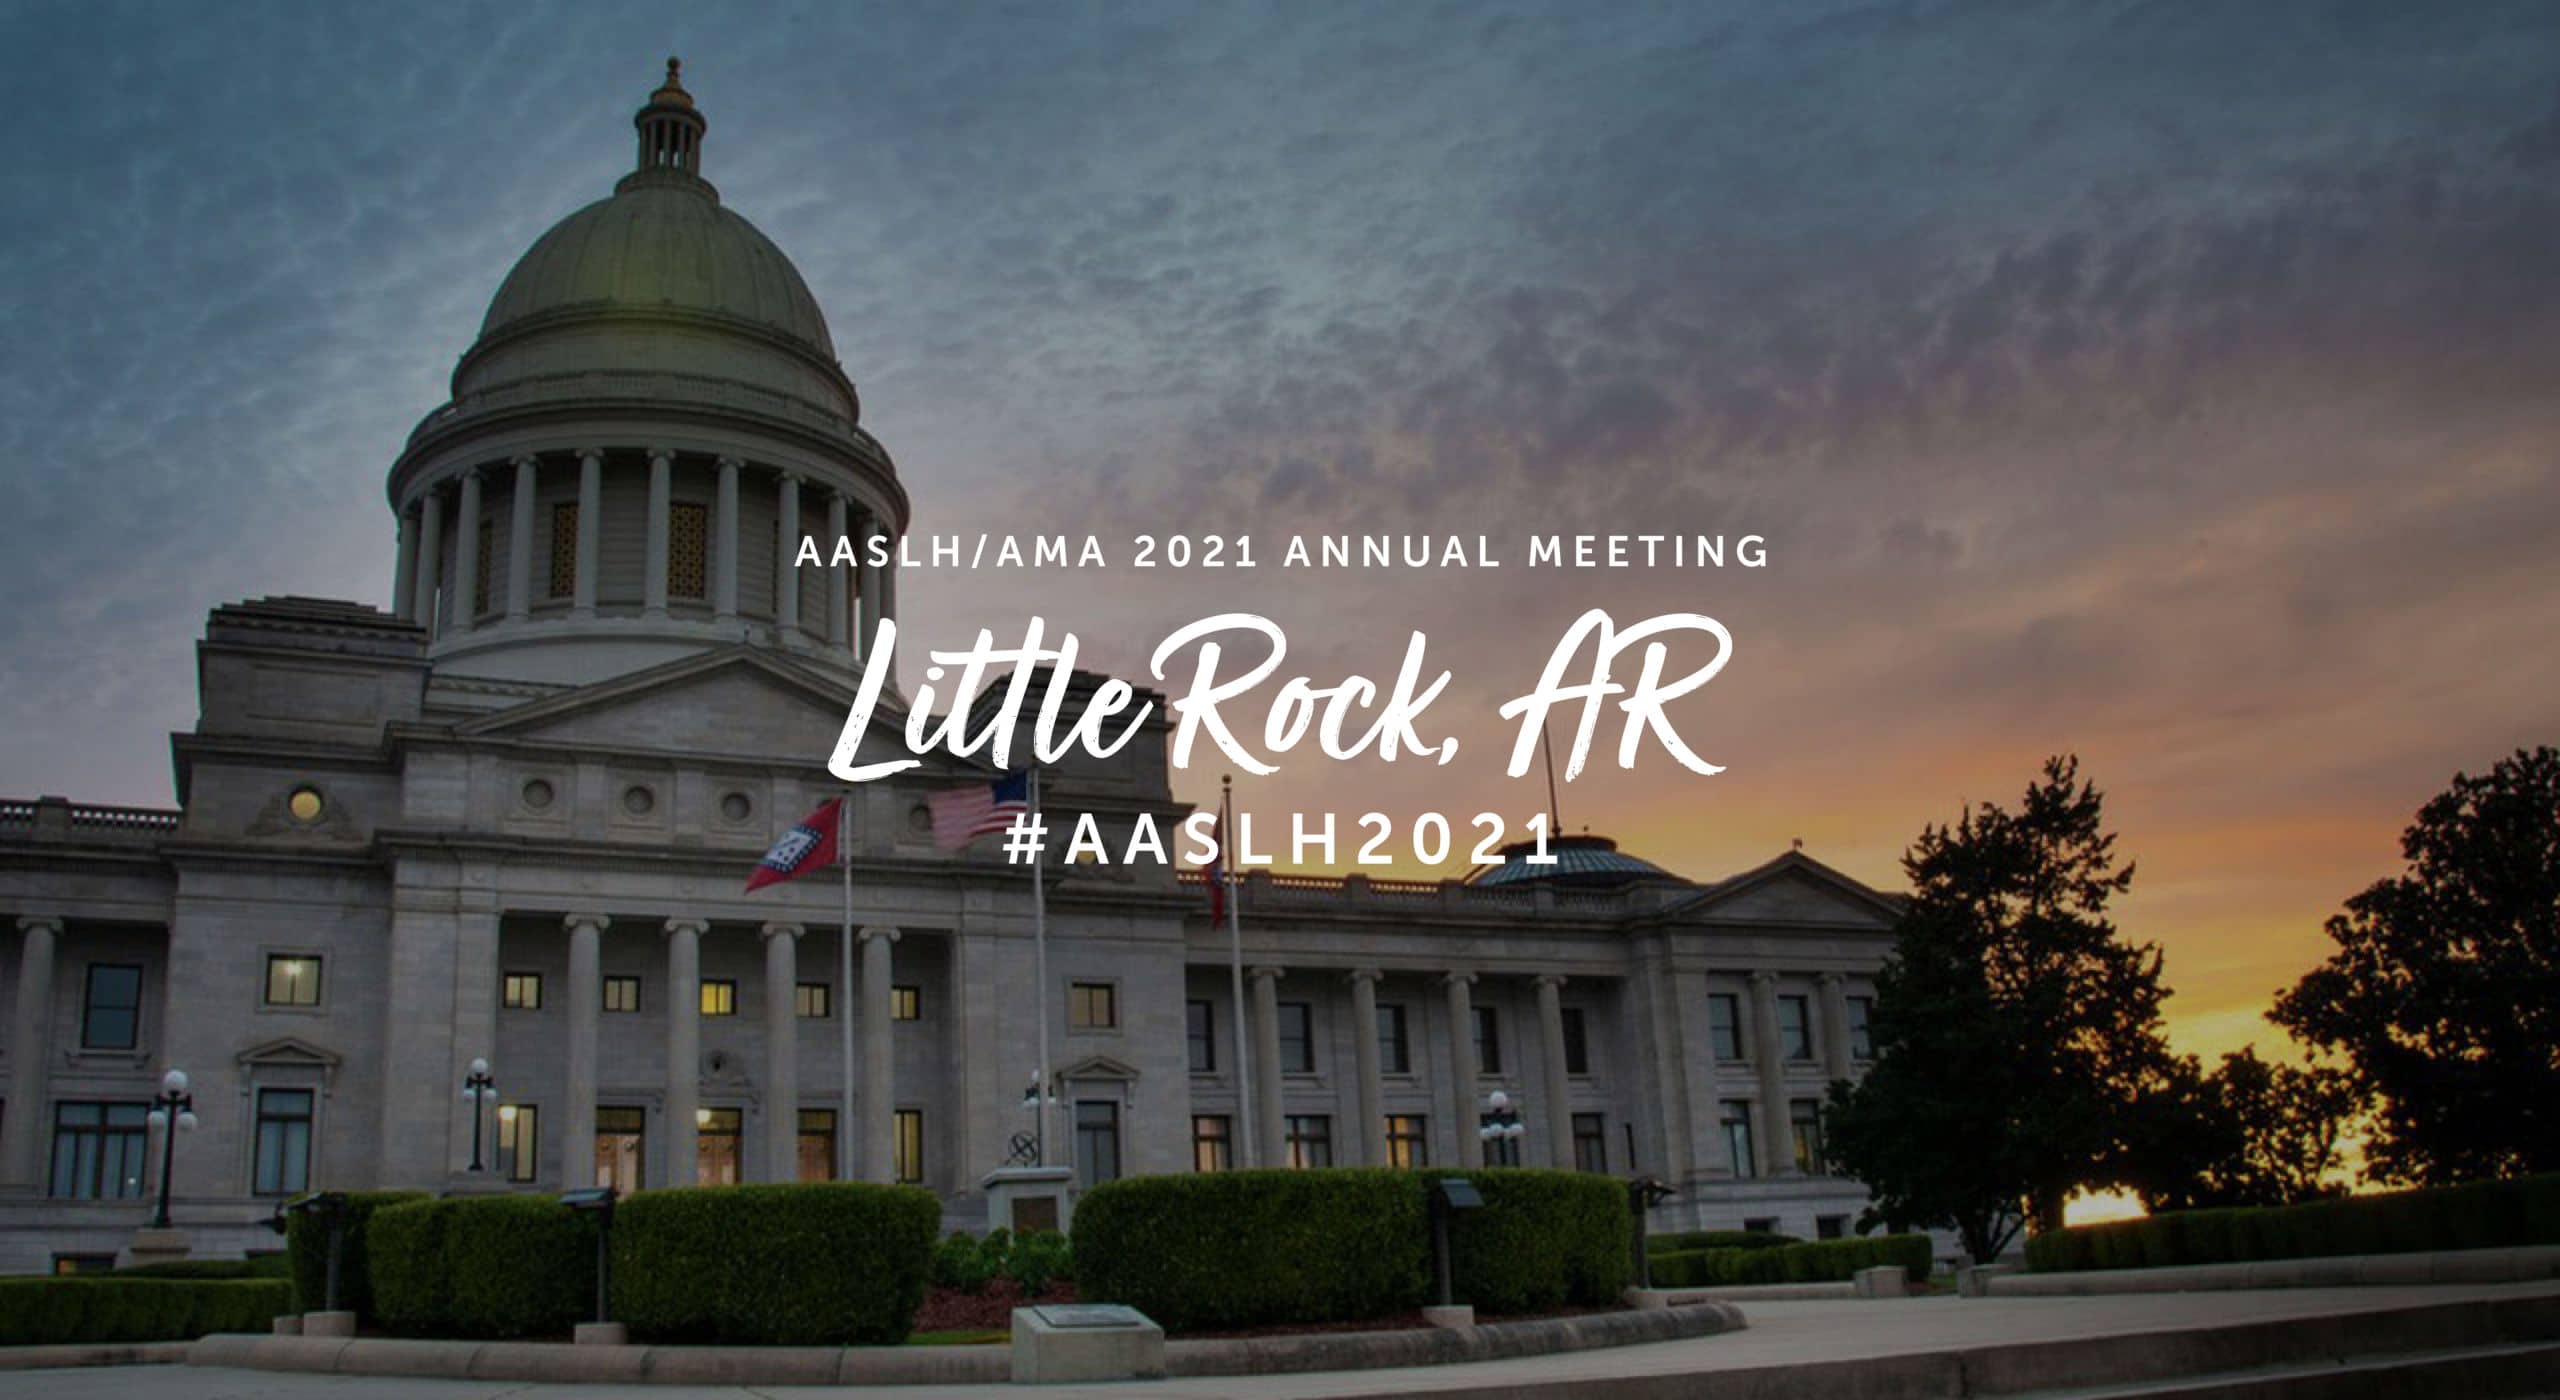 AASLH/AMA 2021 Annual Meeting in Little Rock, AR